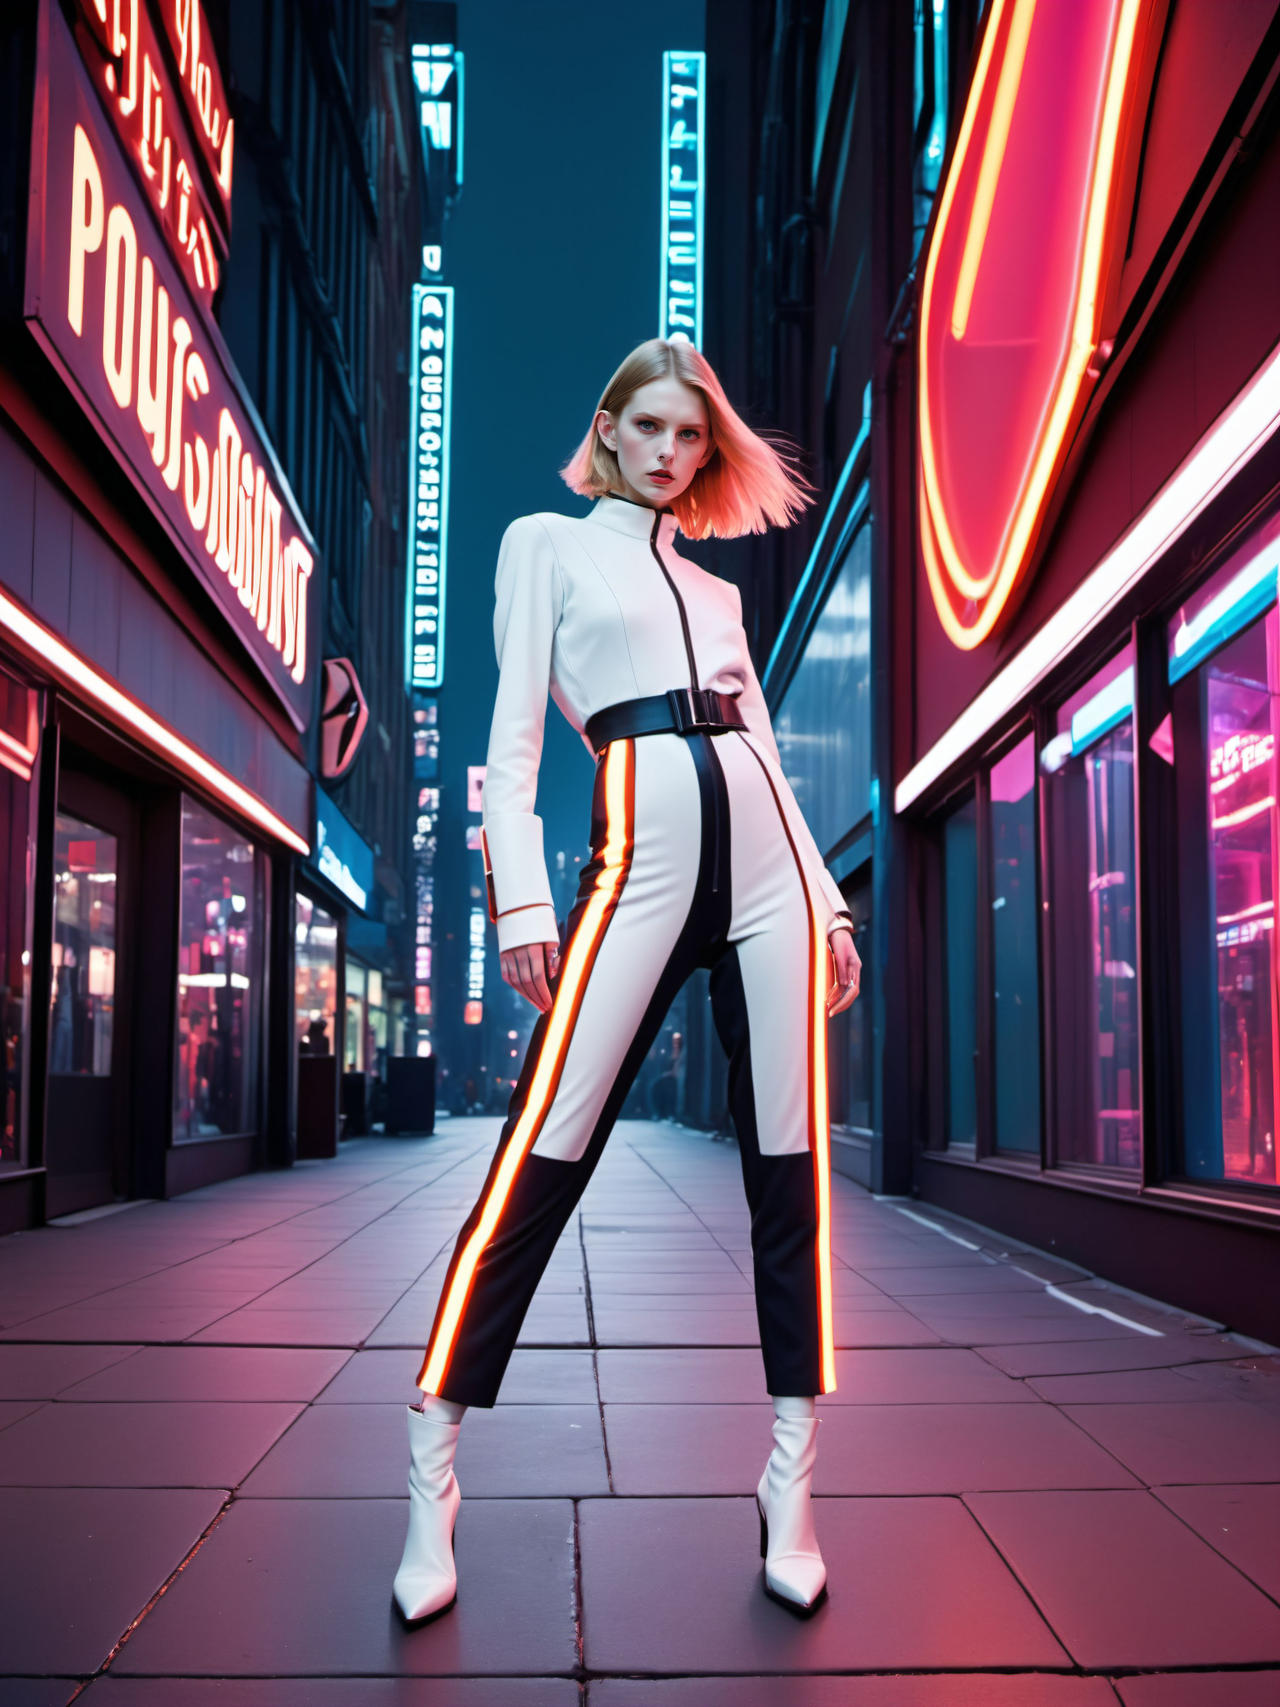 Cyberpunk gothic fashion AI by exokinetic on DeviantArt